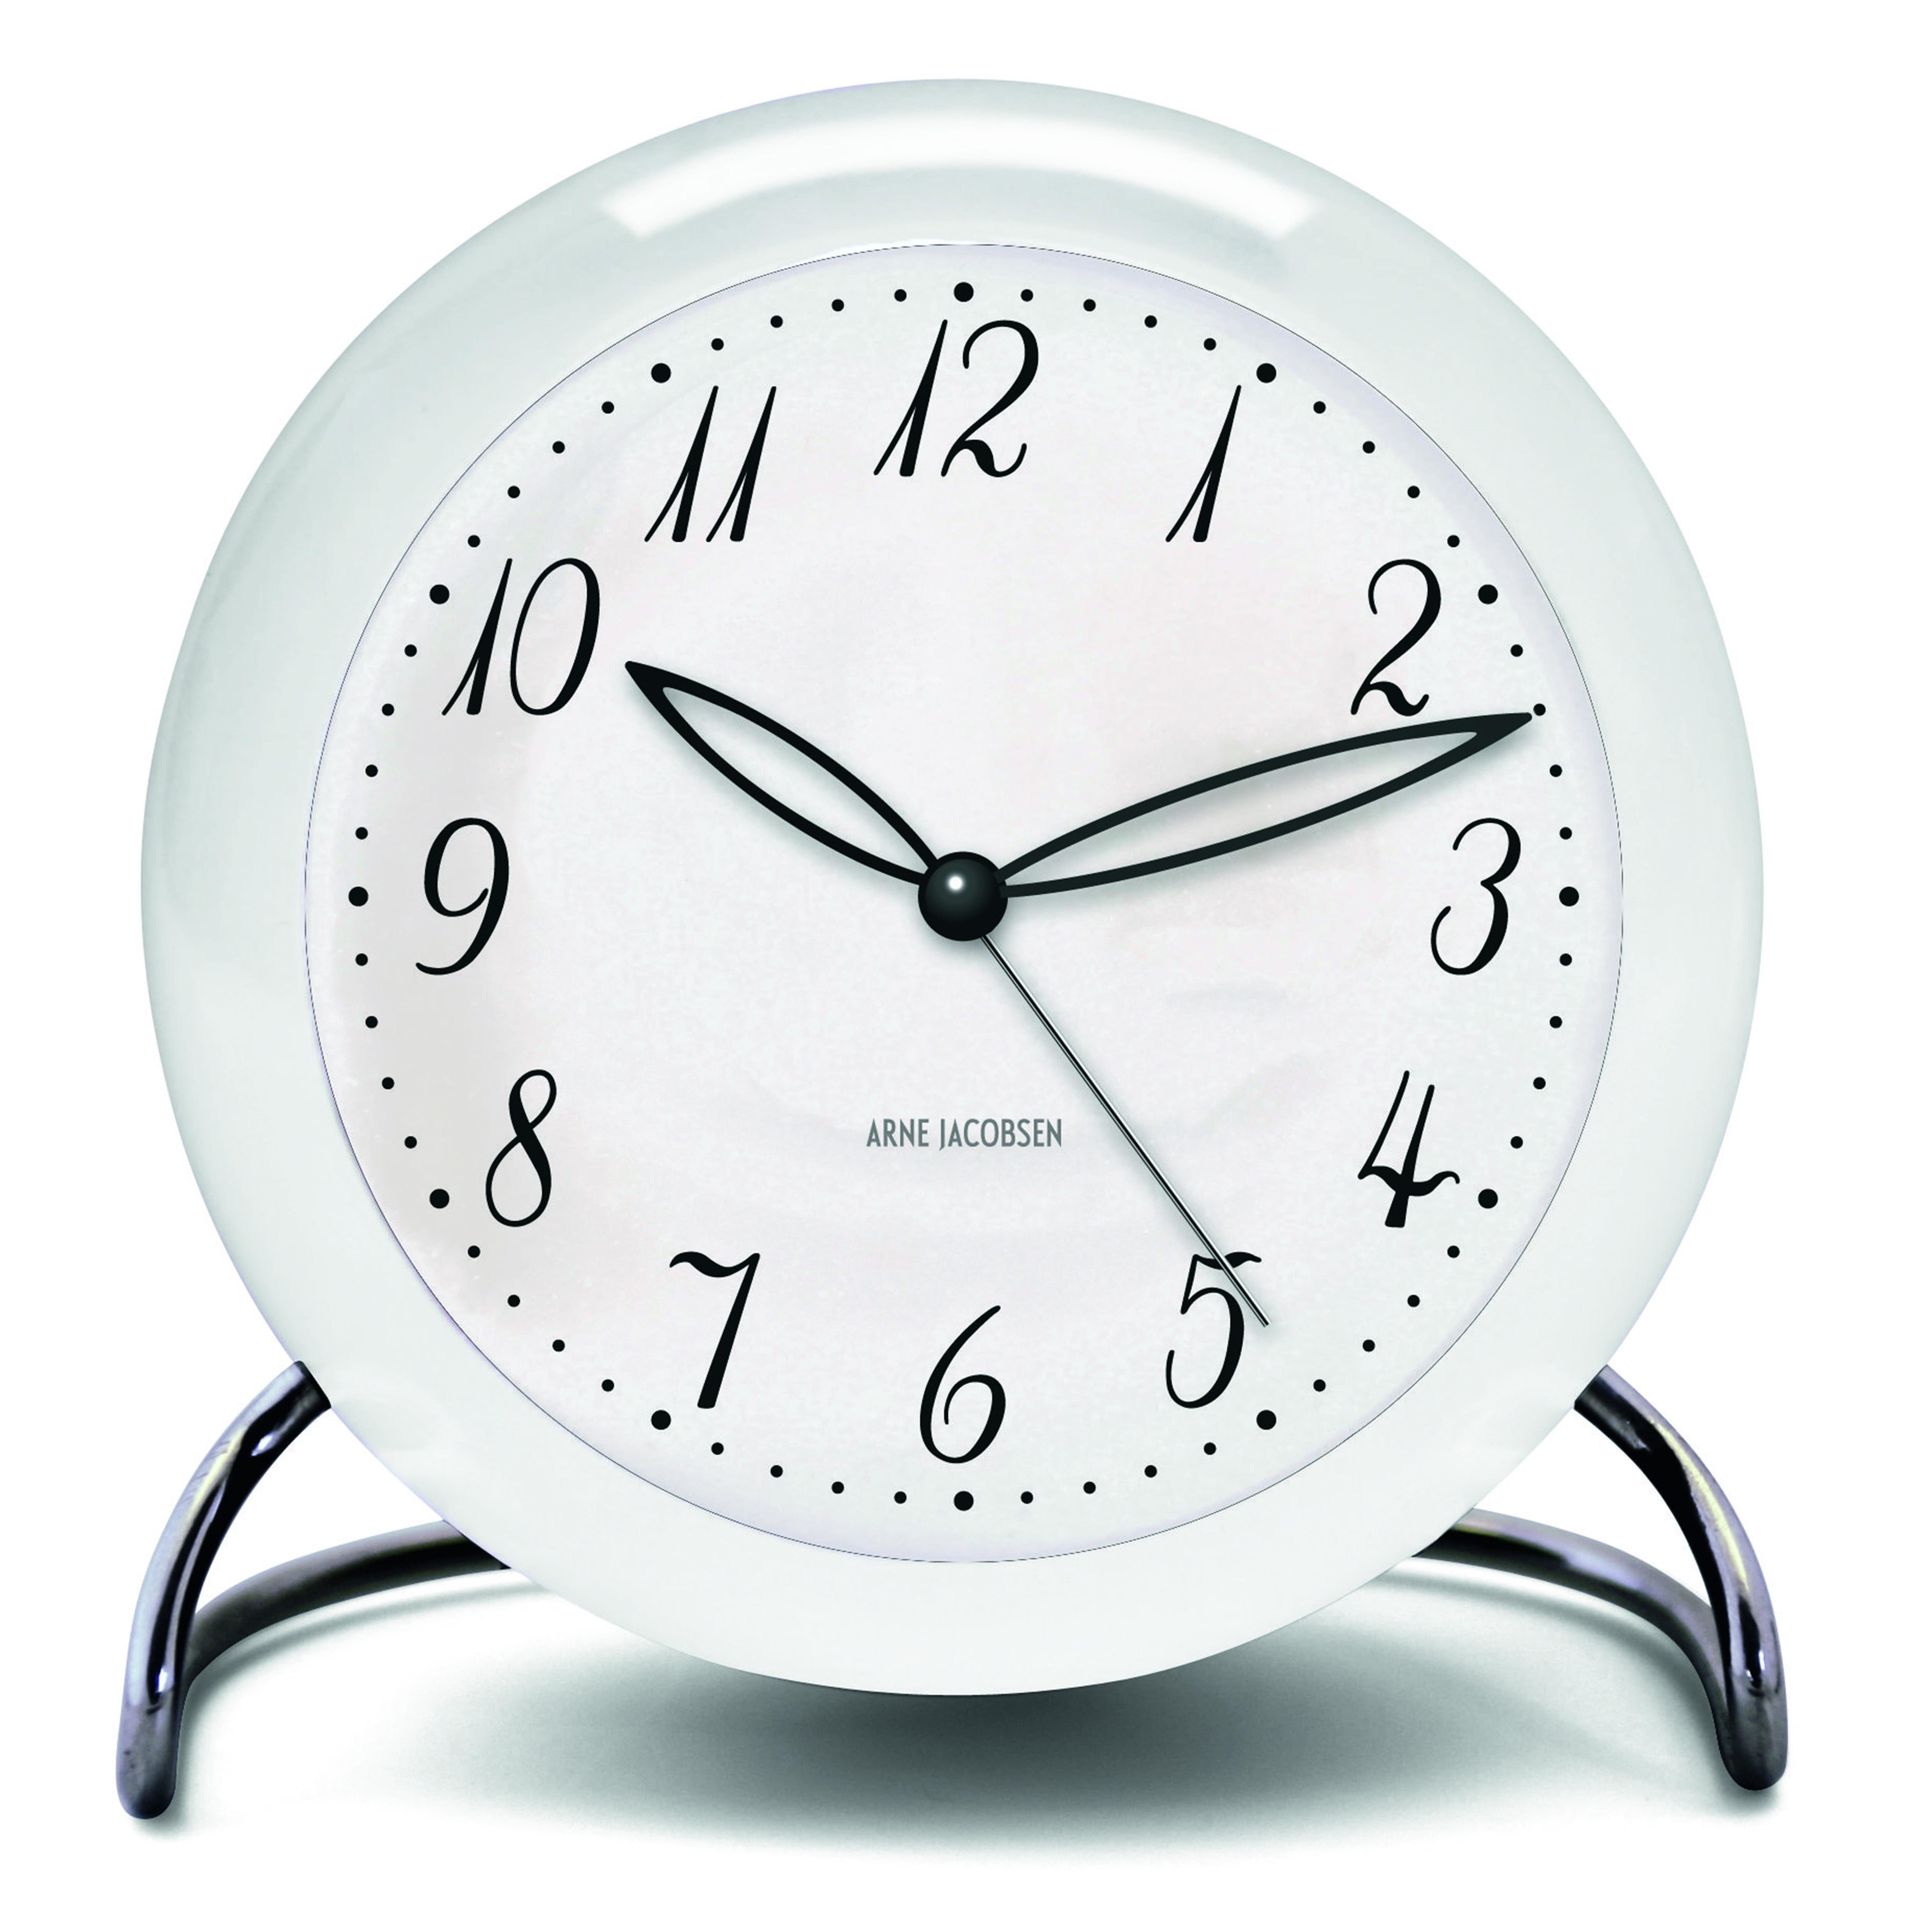 Arne Jacobsen Clocks | アルネ・ヤコブセン 時計 からのAJ LK